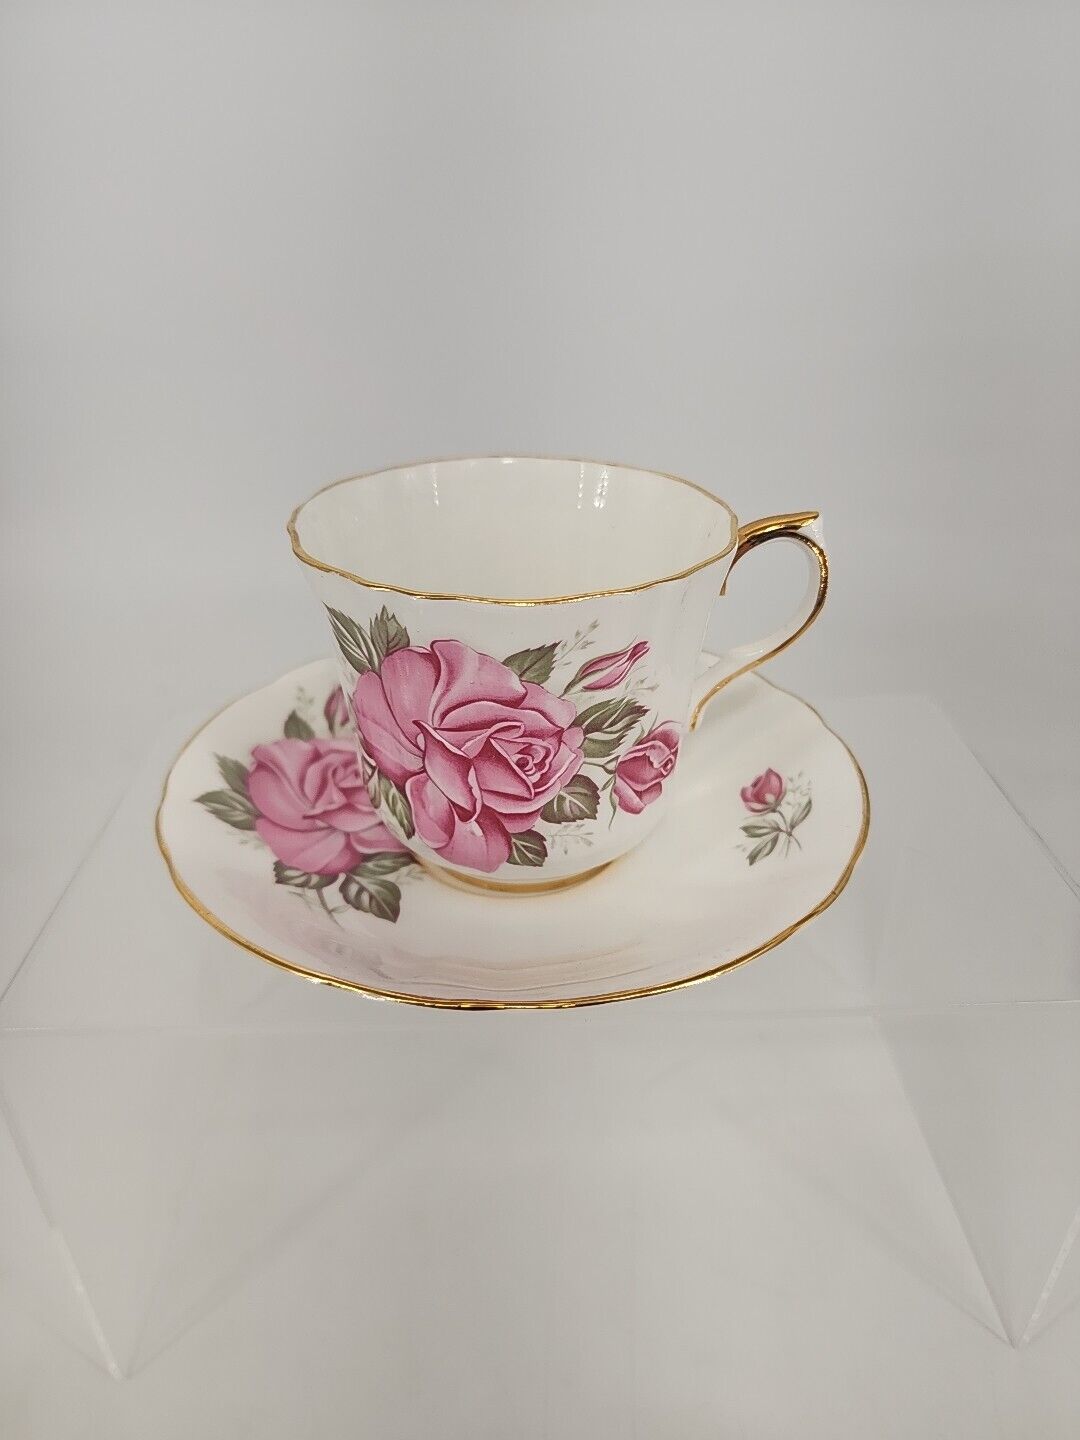 Vintage Royal London Bone China England cup & Saucer Pink Rose Gold trim